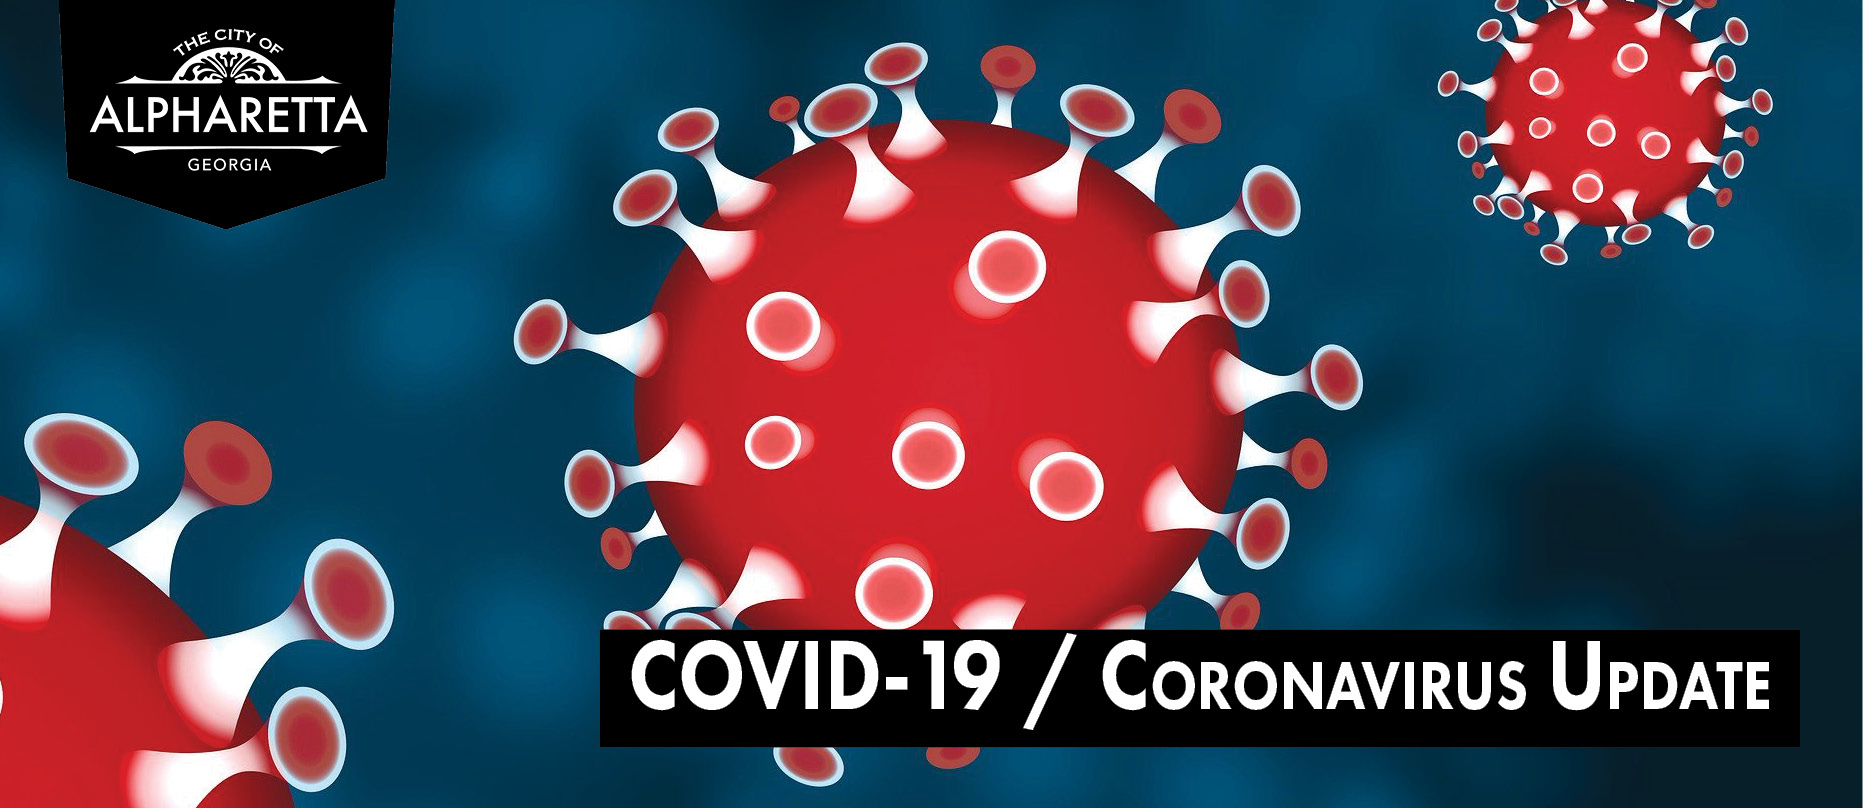 COVID-19 Update Graphic - Website News Item